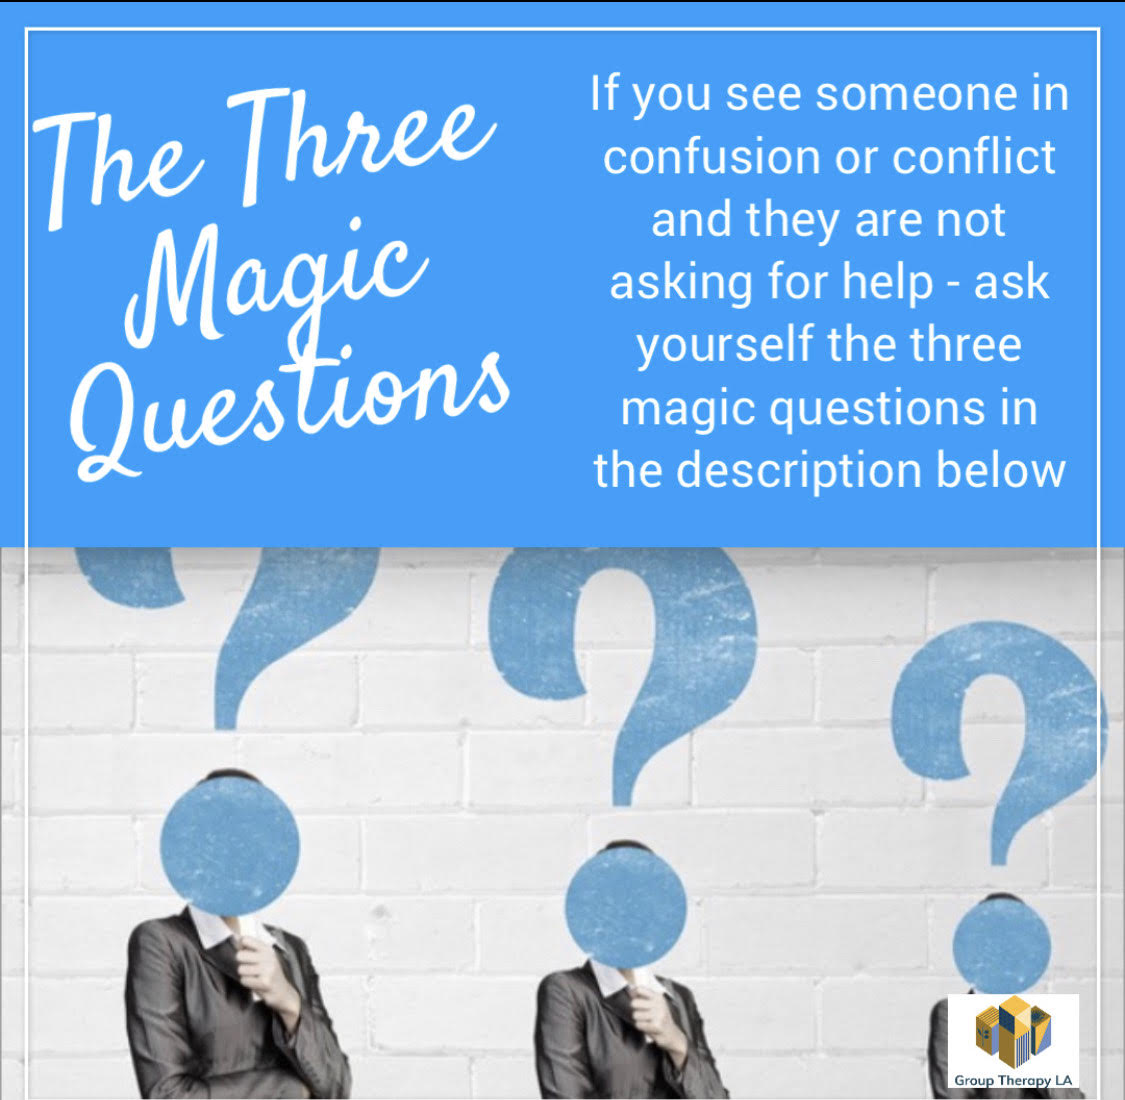 The Three Magic Questions